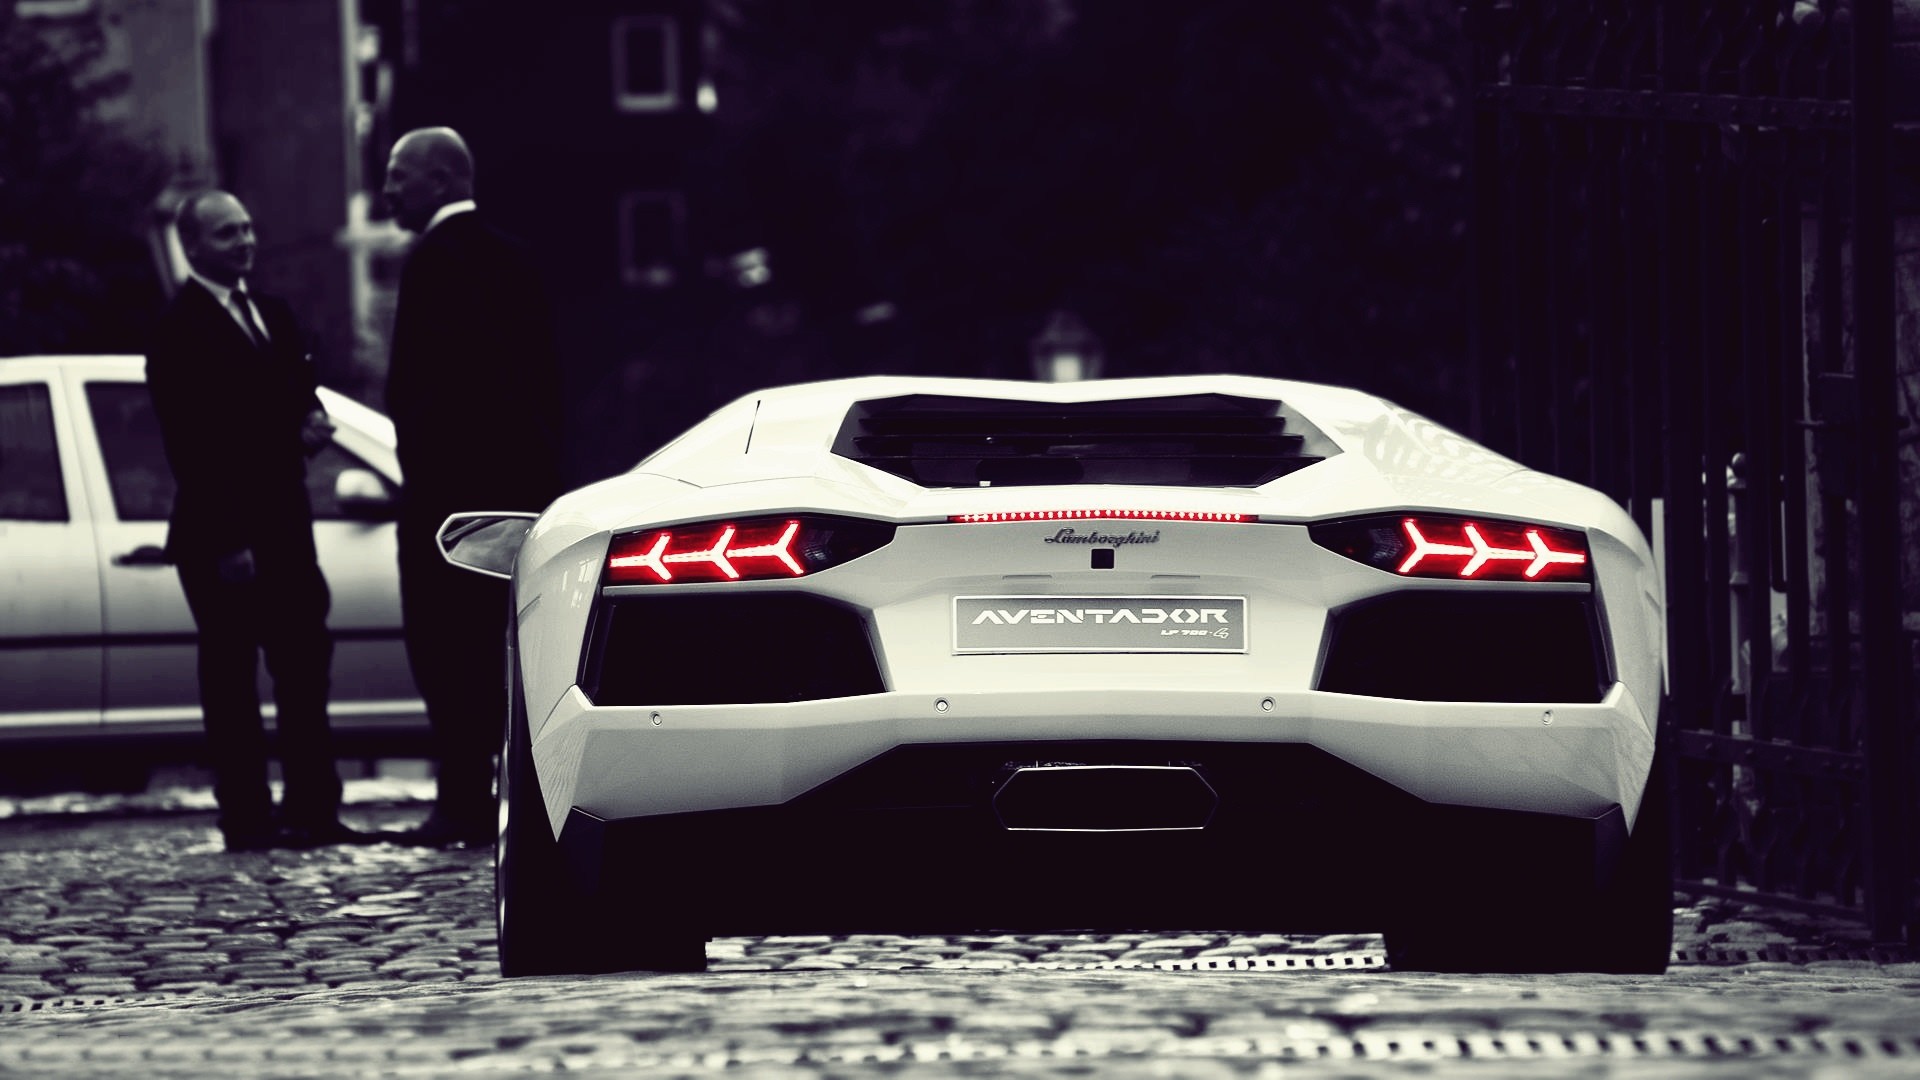 Lamborghini Aventador White Wallpapers